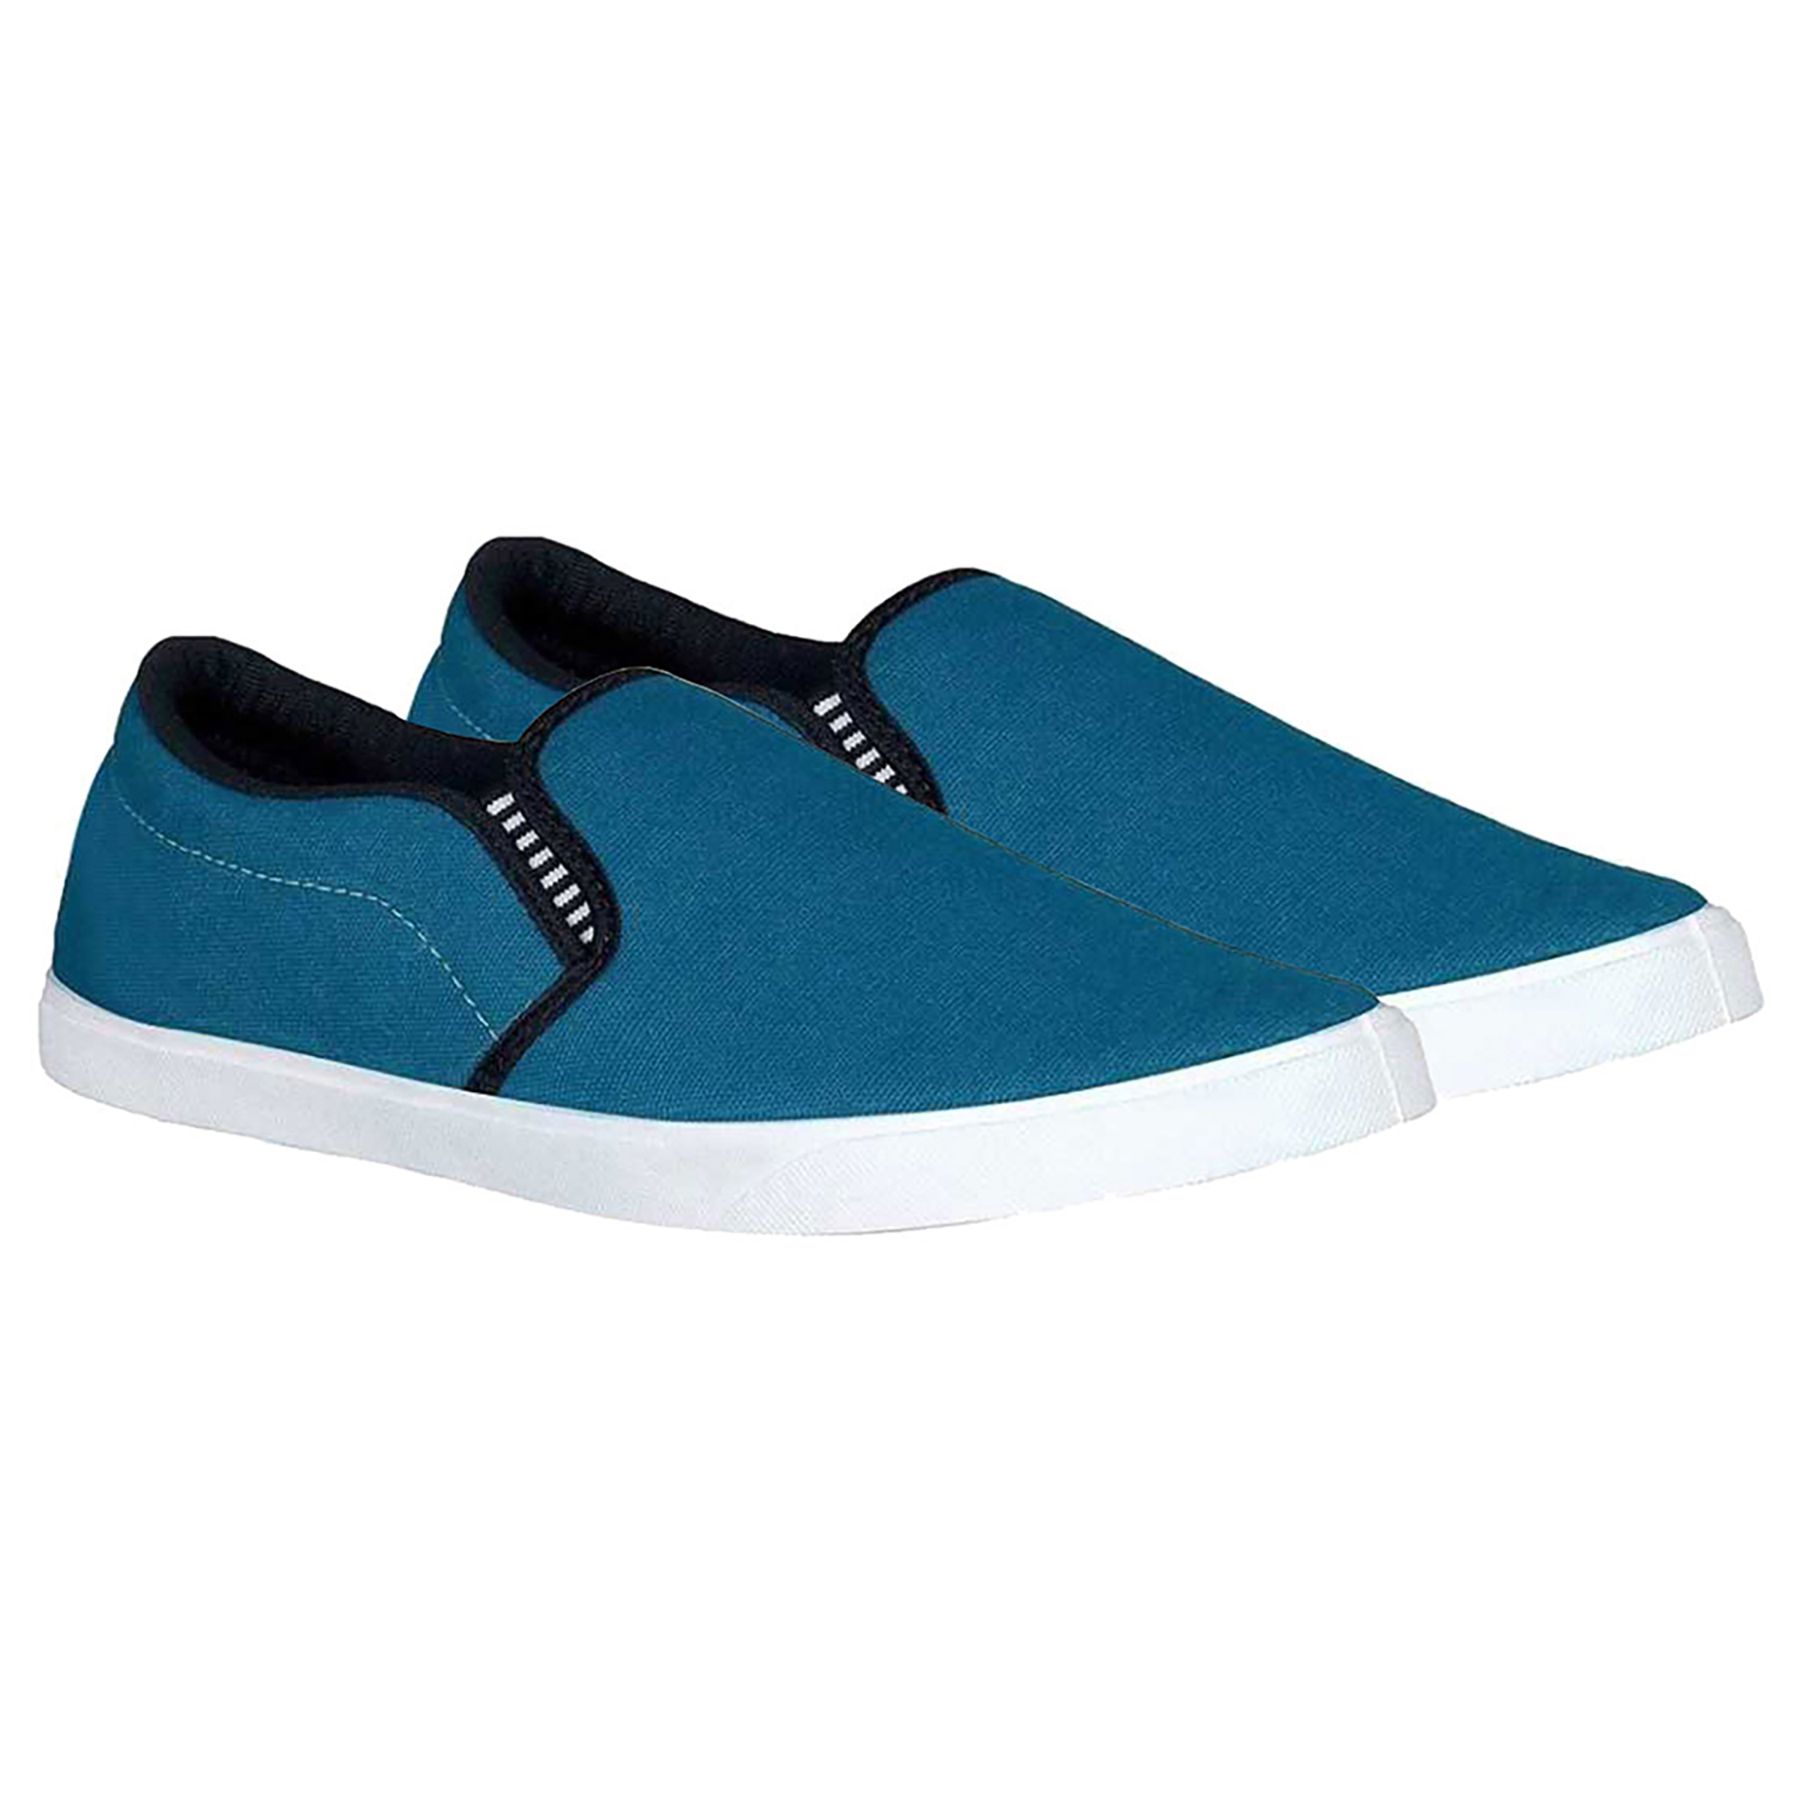     			Bruton Casual Shoes for Men Light Blue Men's Slip-on Shoes